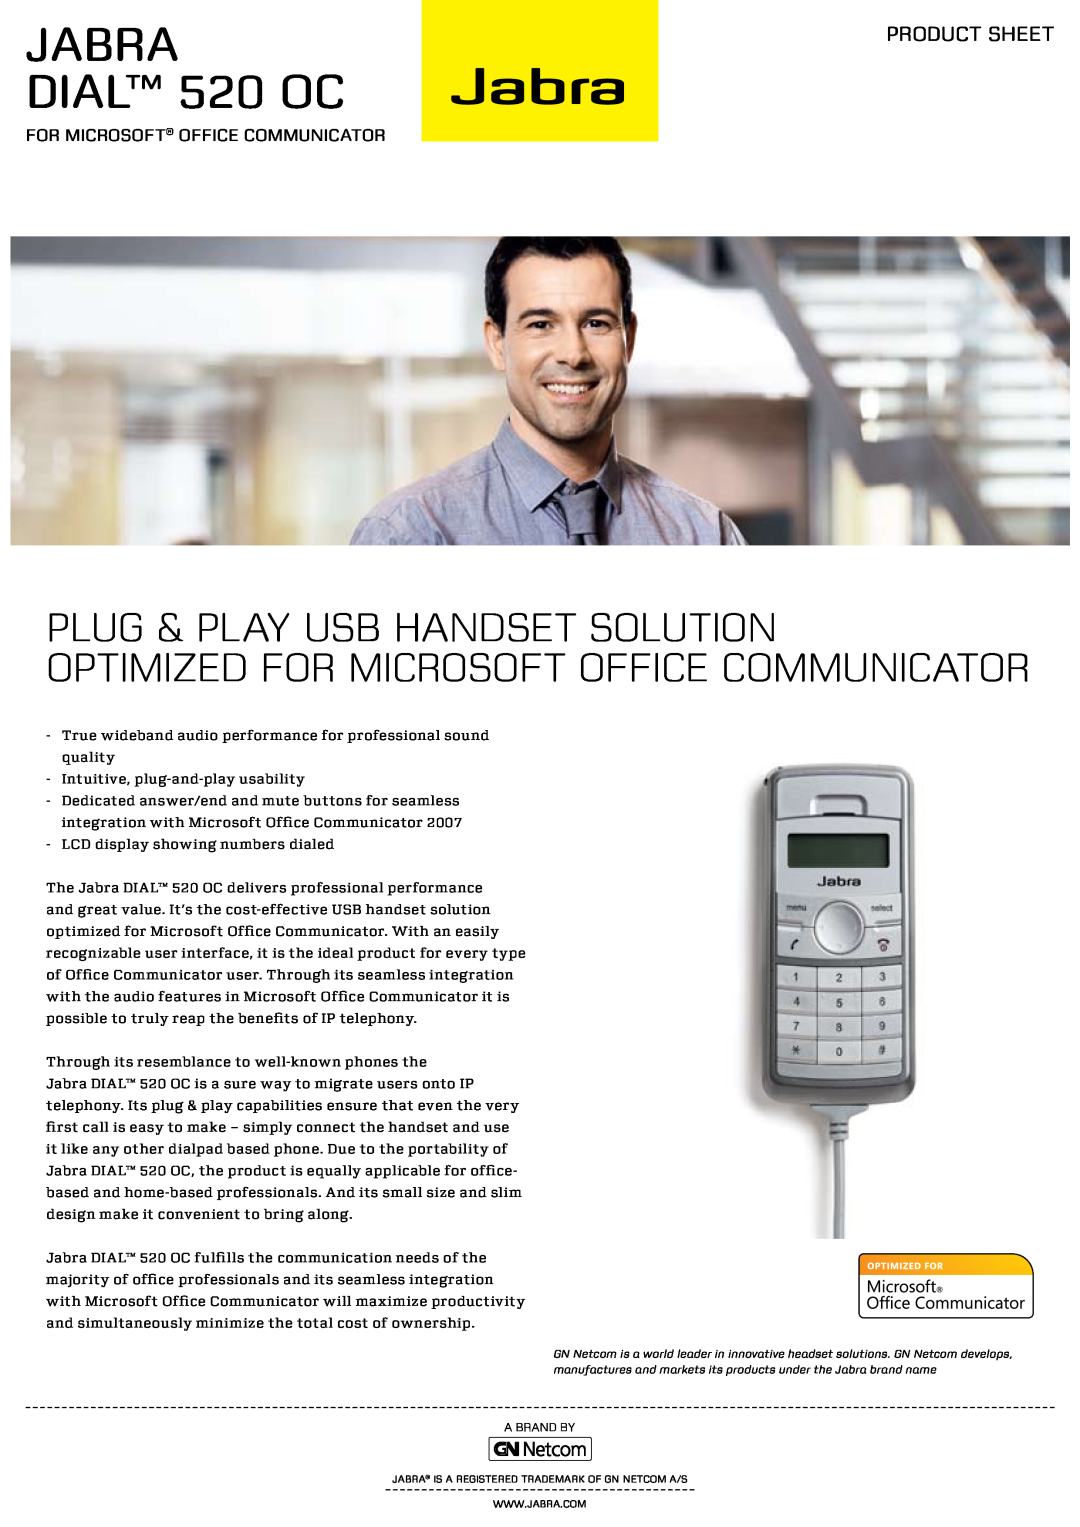 Jabra manual Jabra DIAL 520 OC, for Microsoft Office Communicator, Plug & play USB handset solution, PRODUCT sheet 